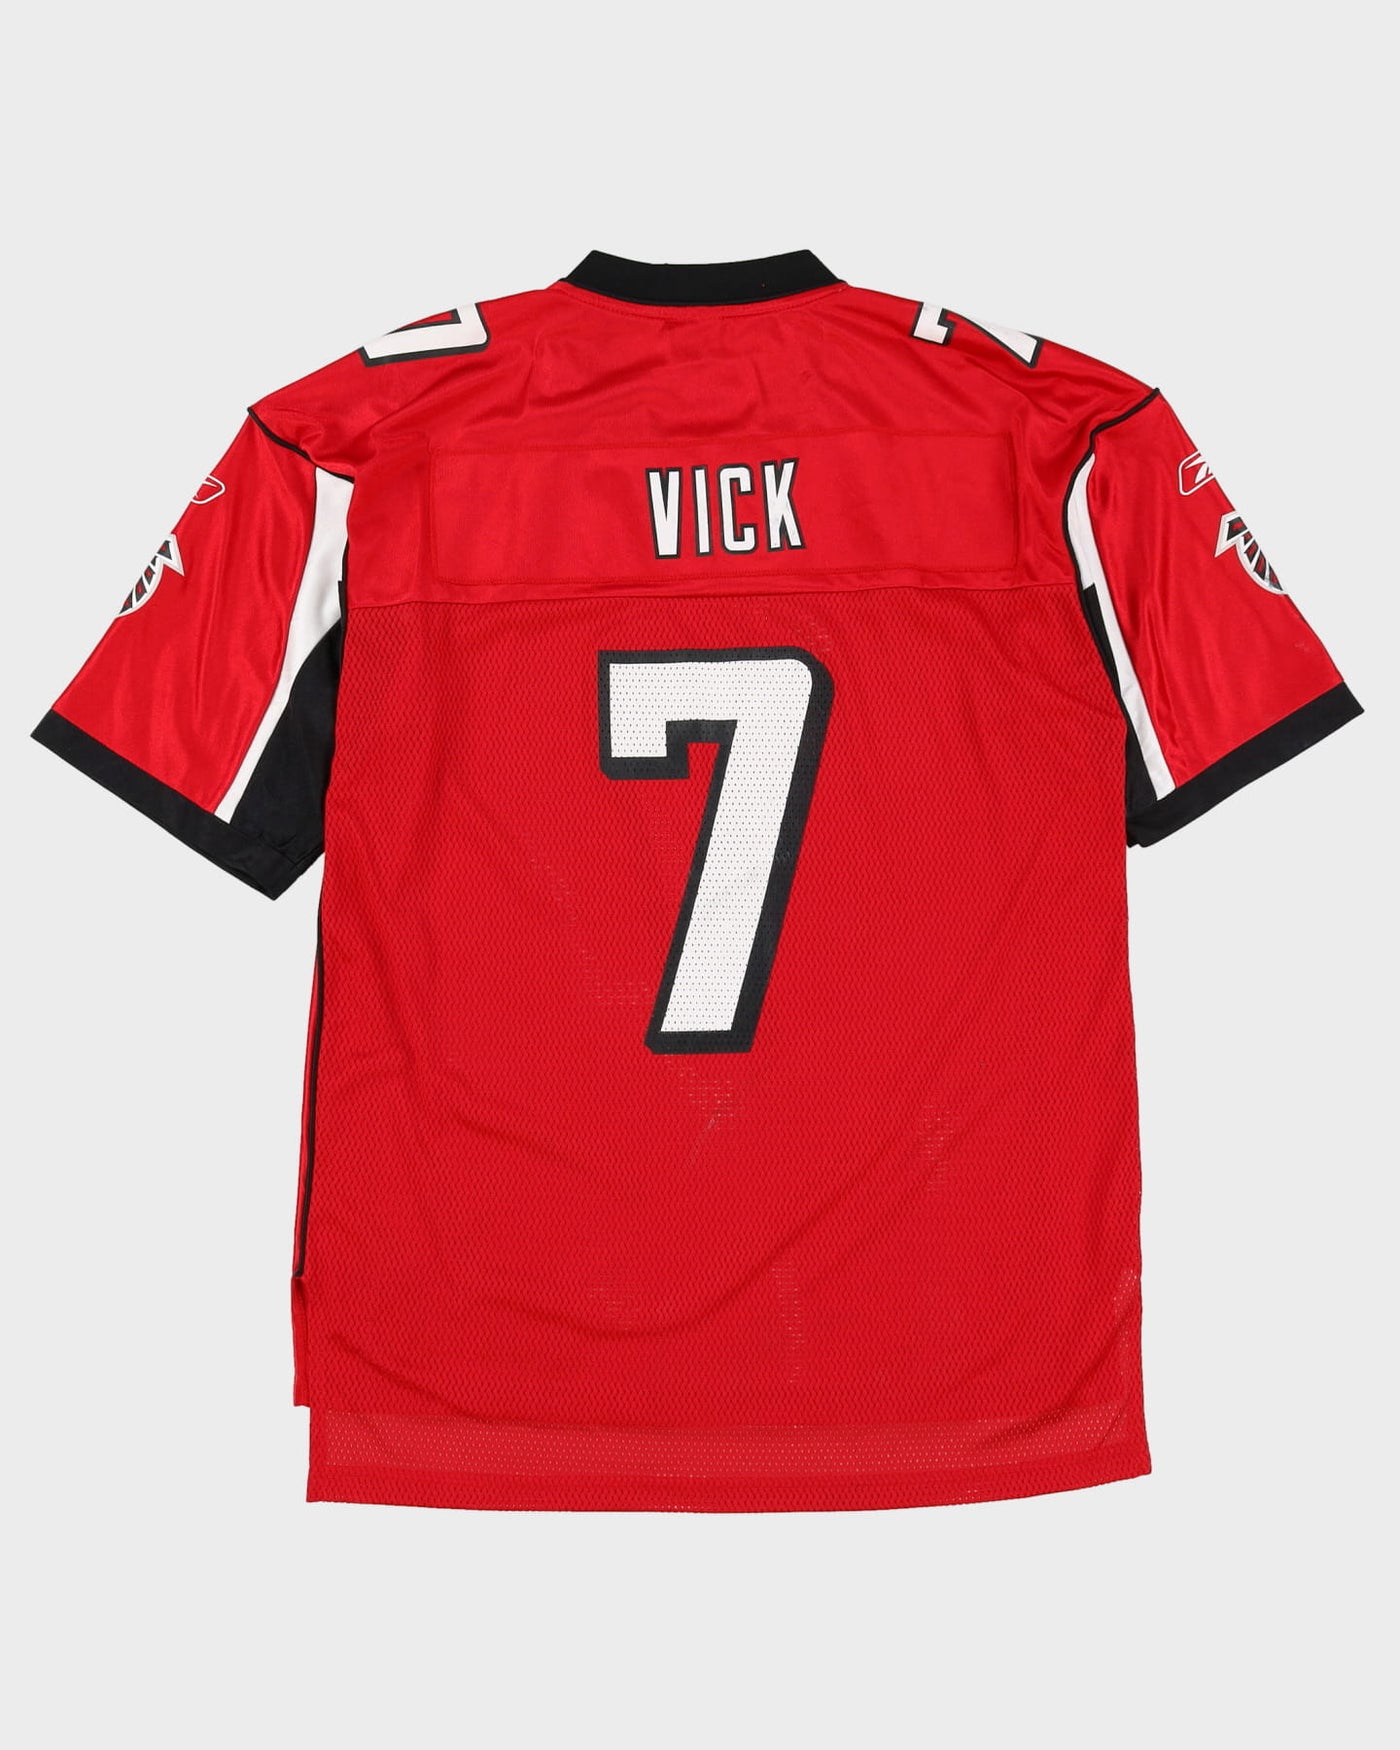 Mike Vick #7 Atlanta Falcons Red / Black Reebok NFL Oversized Jersey - M